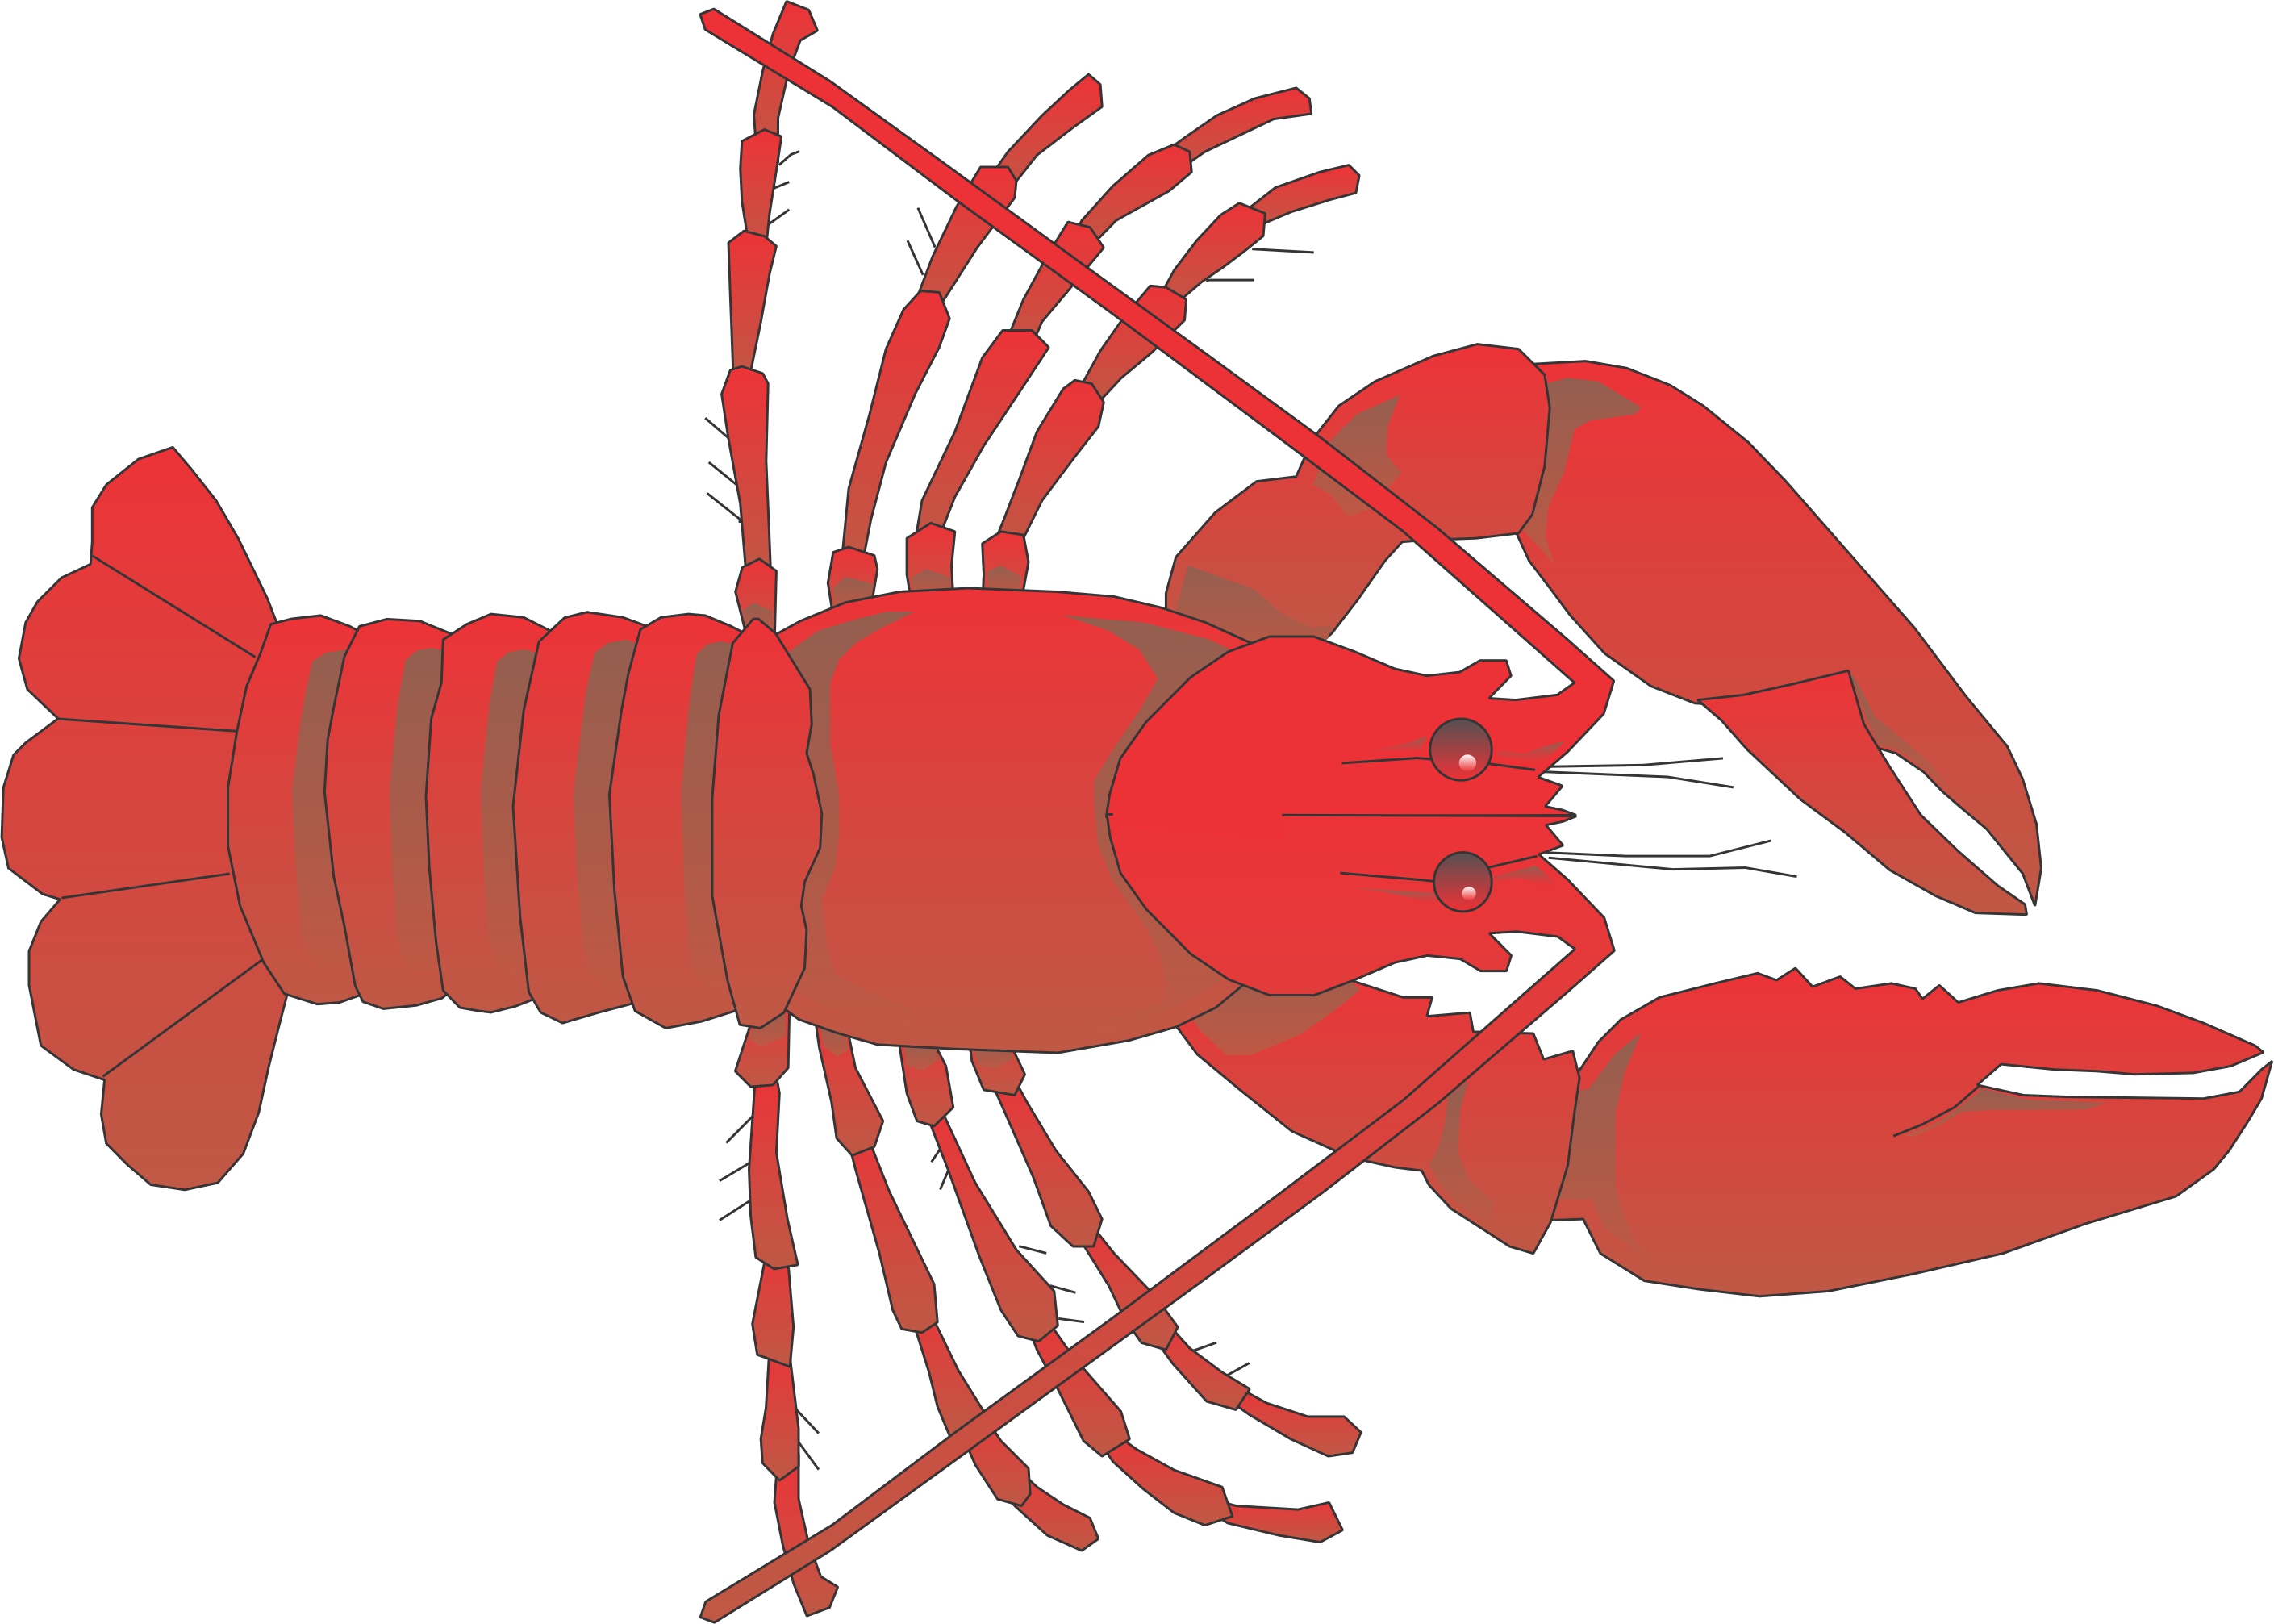 Lobster Cartoon Images | Free Download Clip Art | Free Clip Art ...